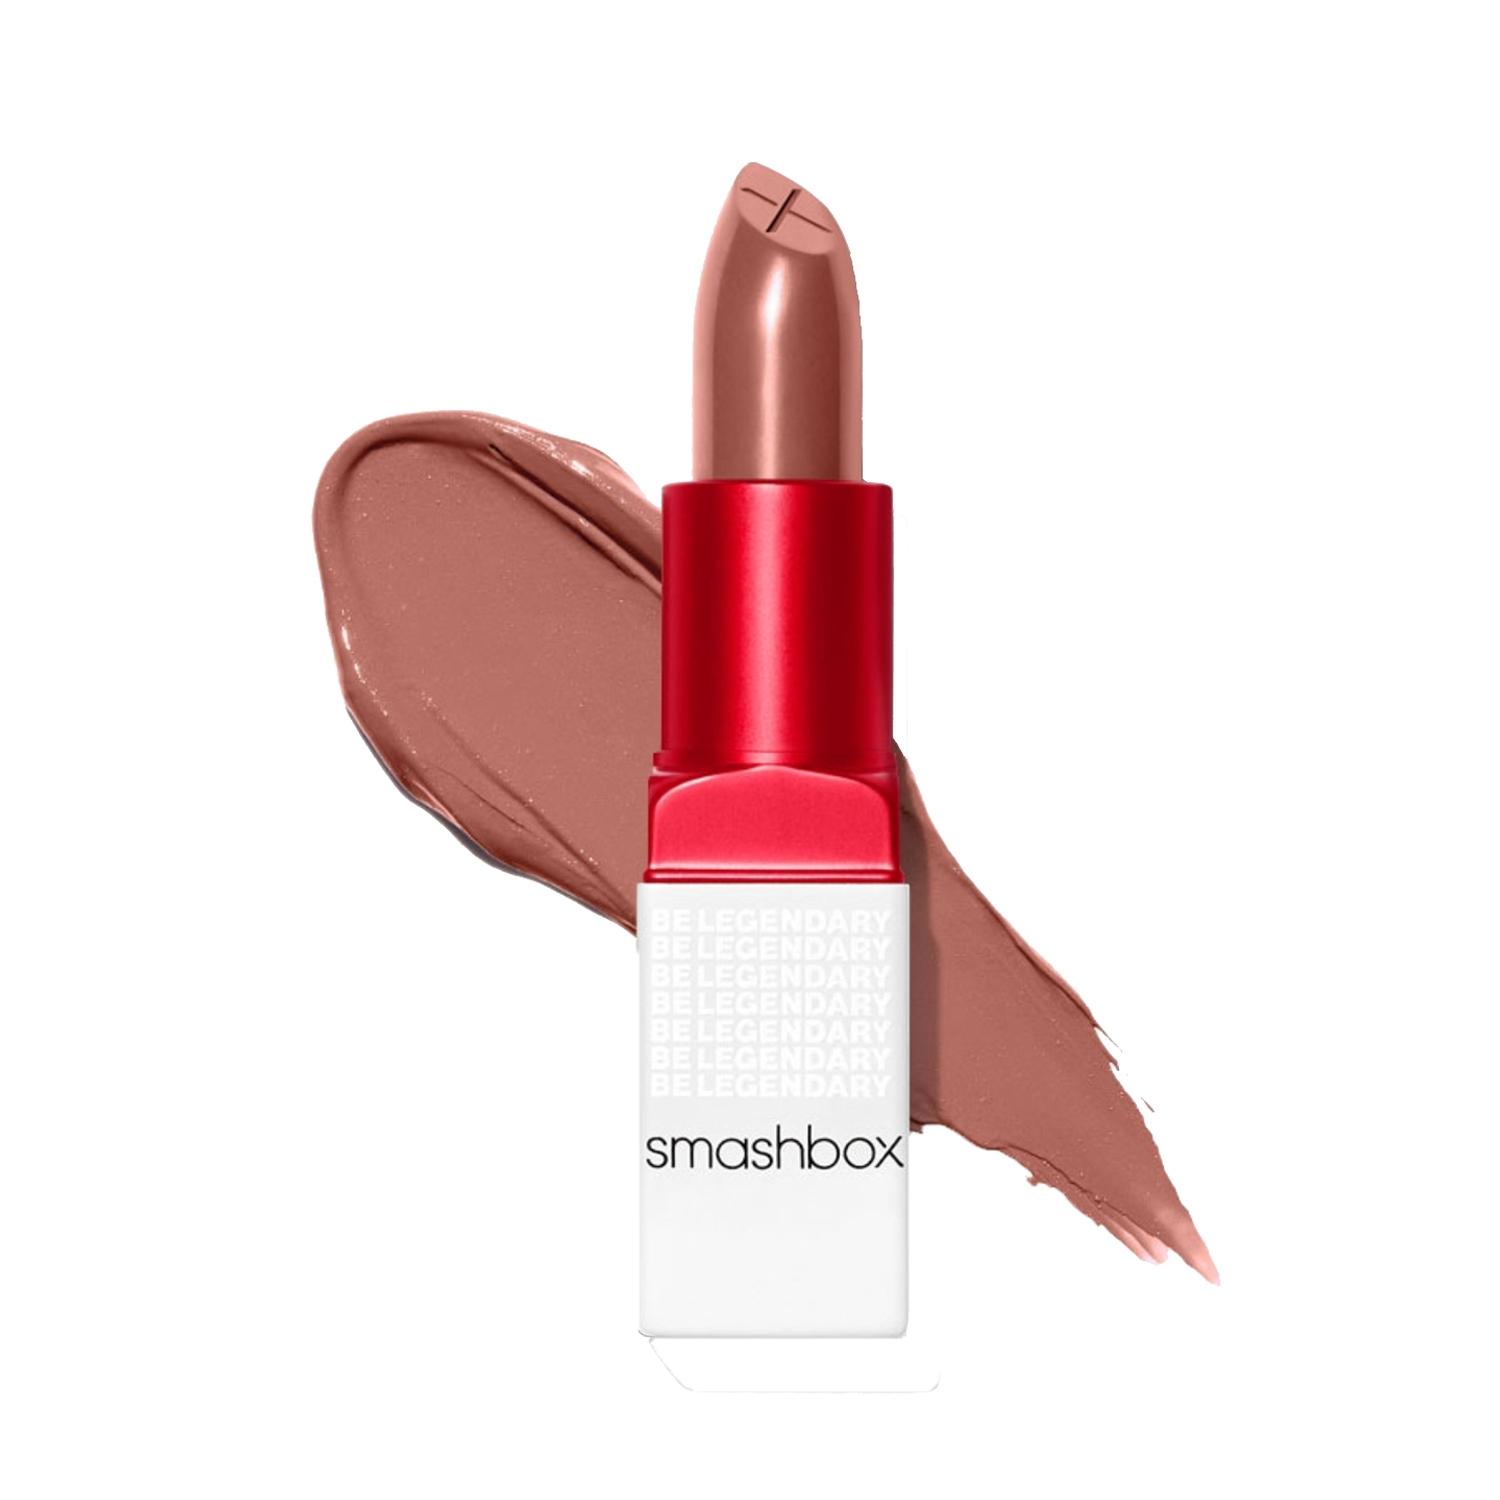 smashbox be legendary prime & plush lipstick - rich nude (3.4g)